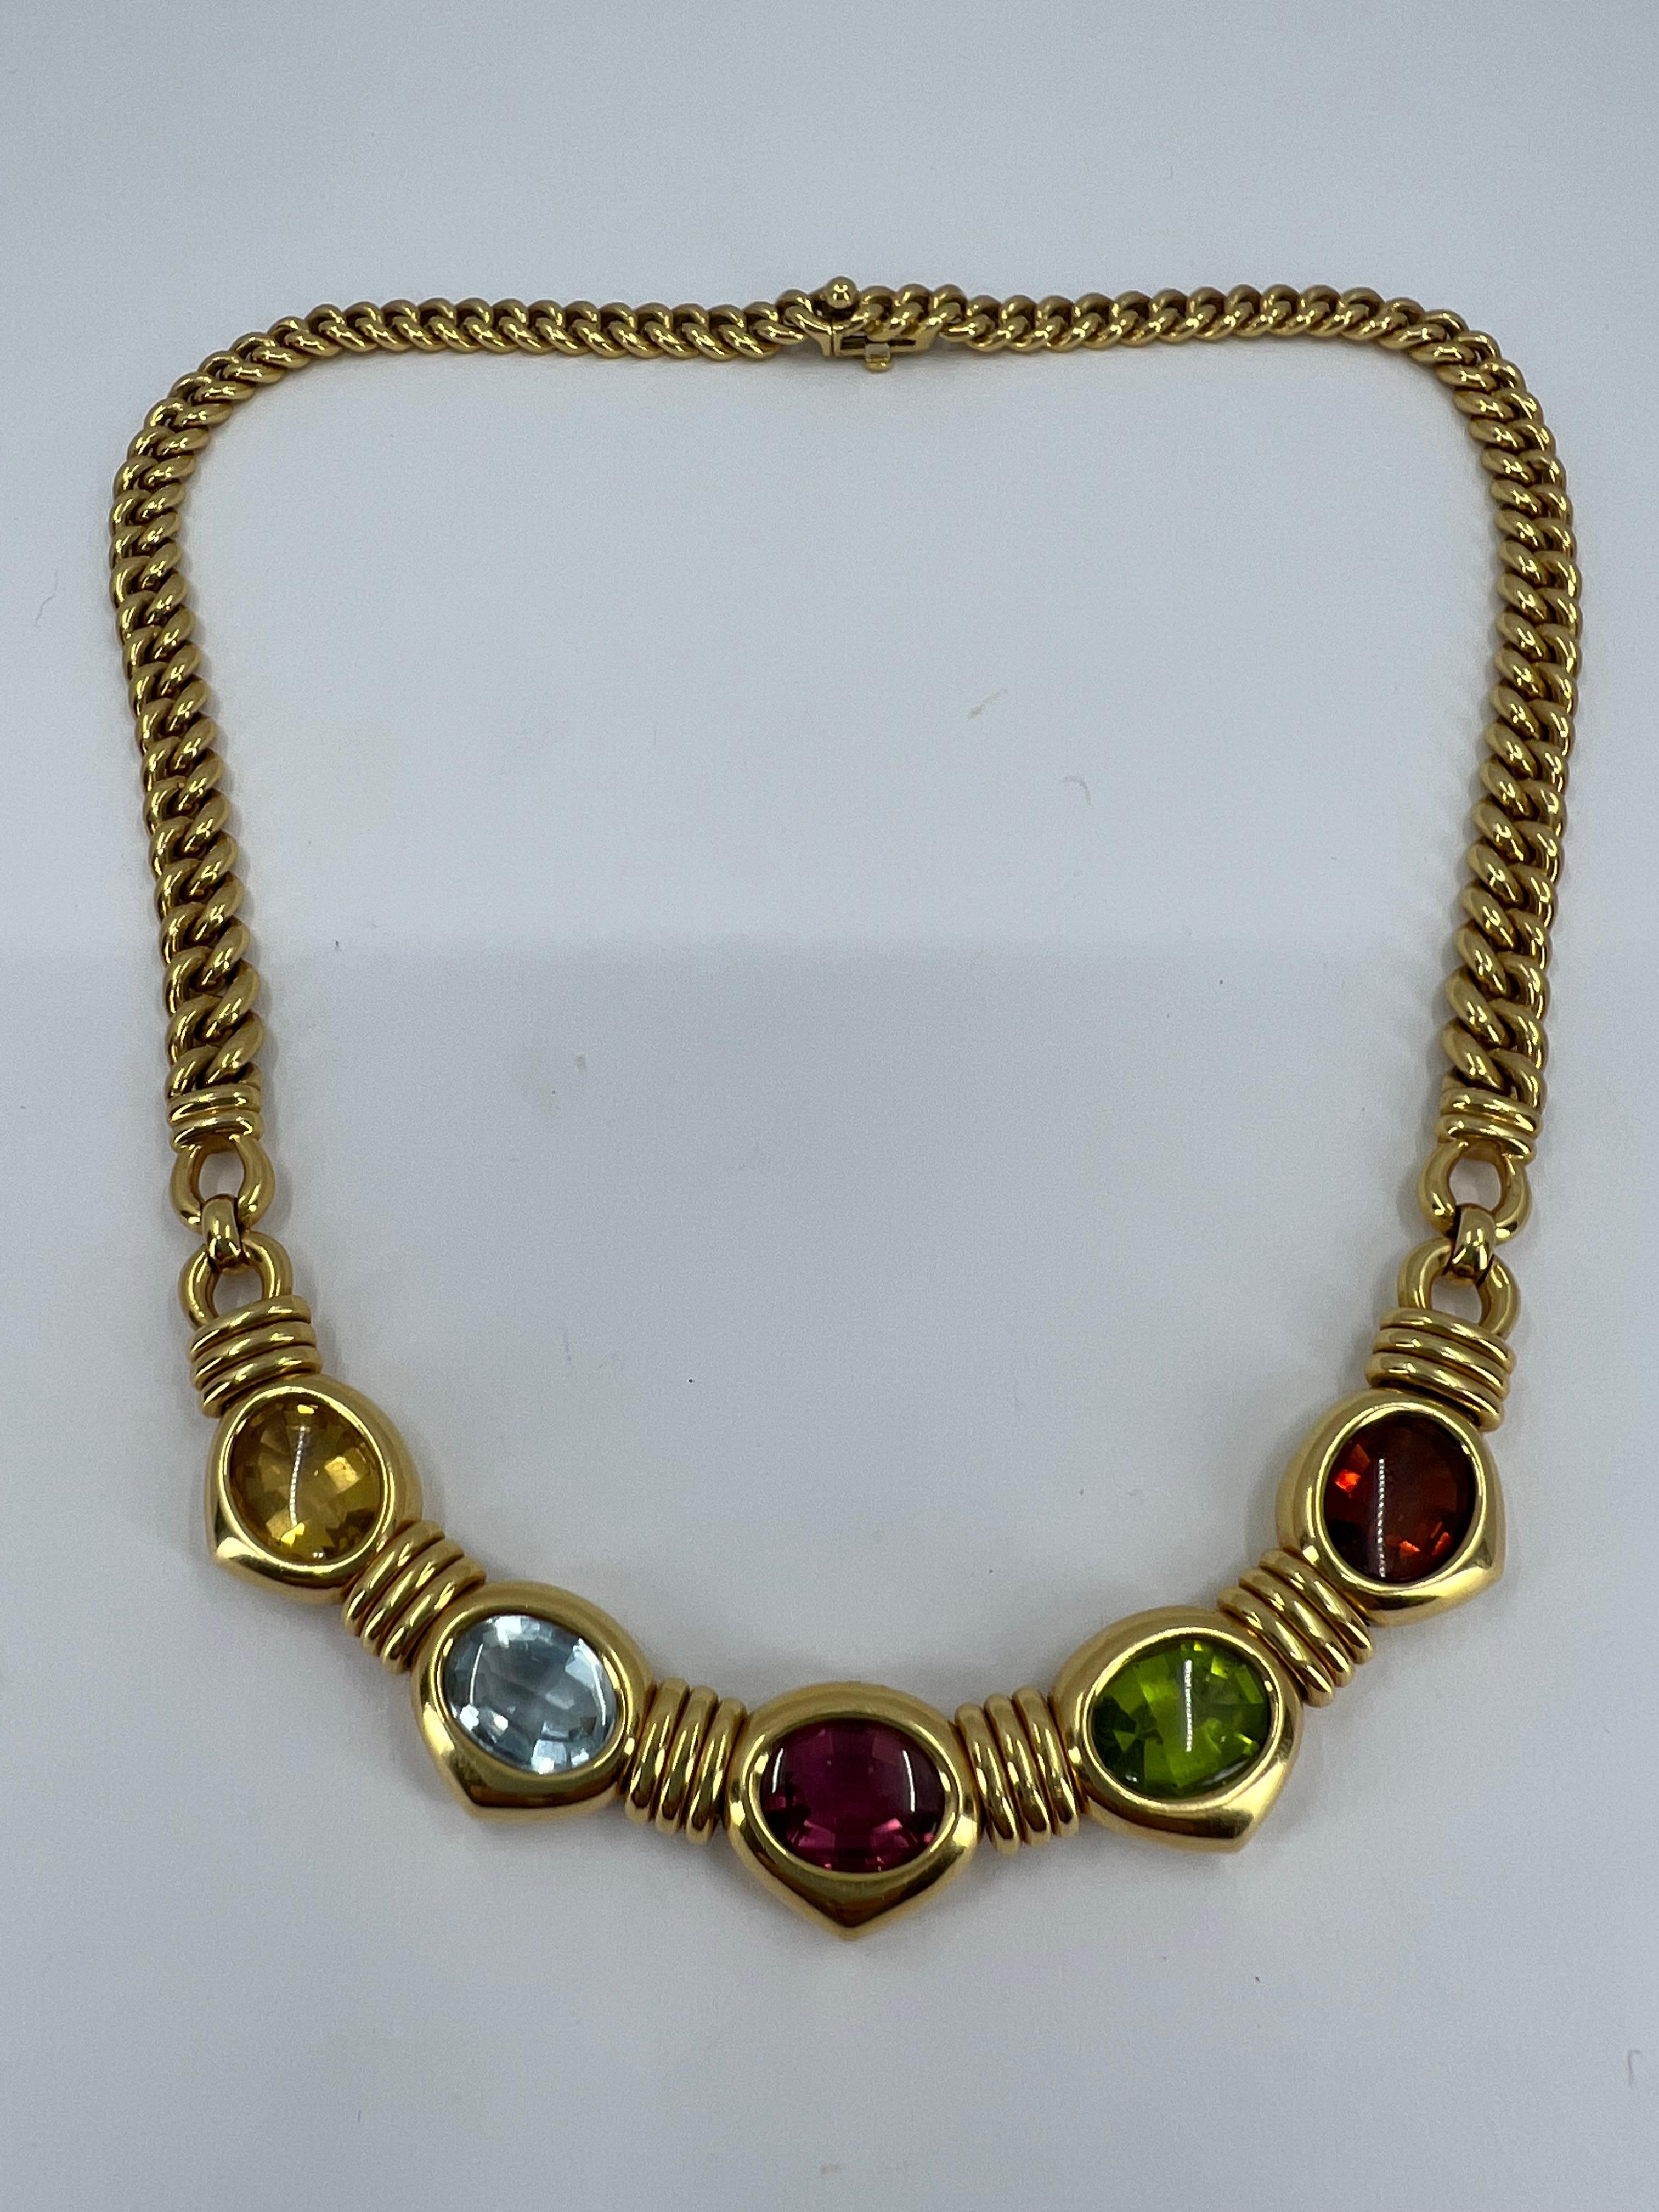 DESIGNER: Bulgari
CIRCA: 1980’s
MATERIALS: 18K Yellow Gold
GEMSTONE: Citrine, aquamarine, pink tourmaline, peridot and garnet
WEIGHT: 85.9 grams
MEASUREMENTS: 15- 1/2” x 1/2”
HALLMARKS: BVLGARI, 750

A beautiful vintage Bulgari necklace made of 18k